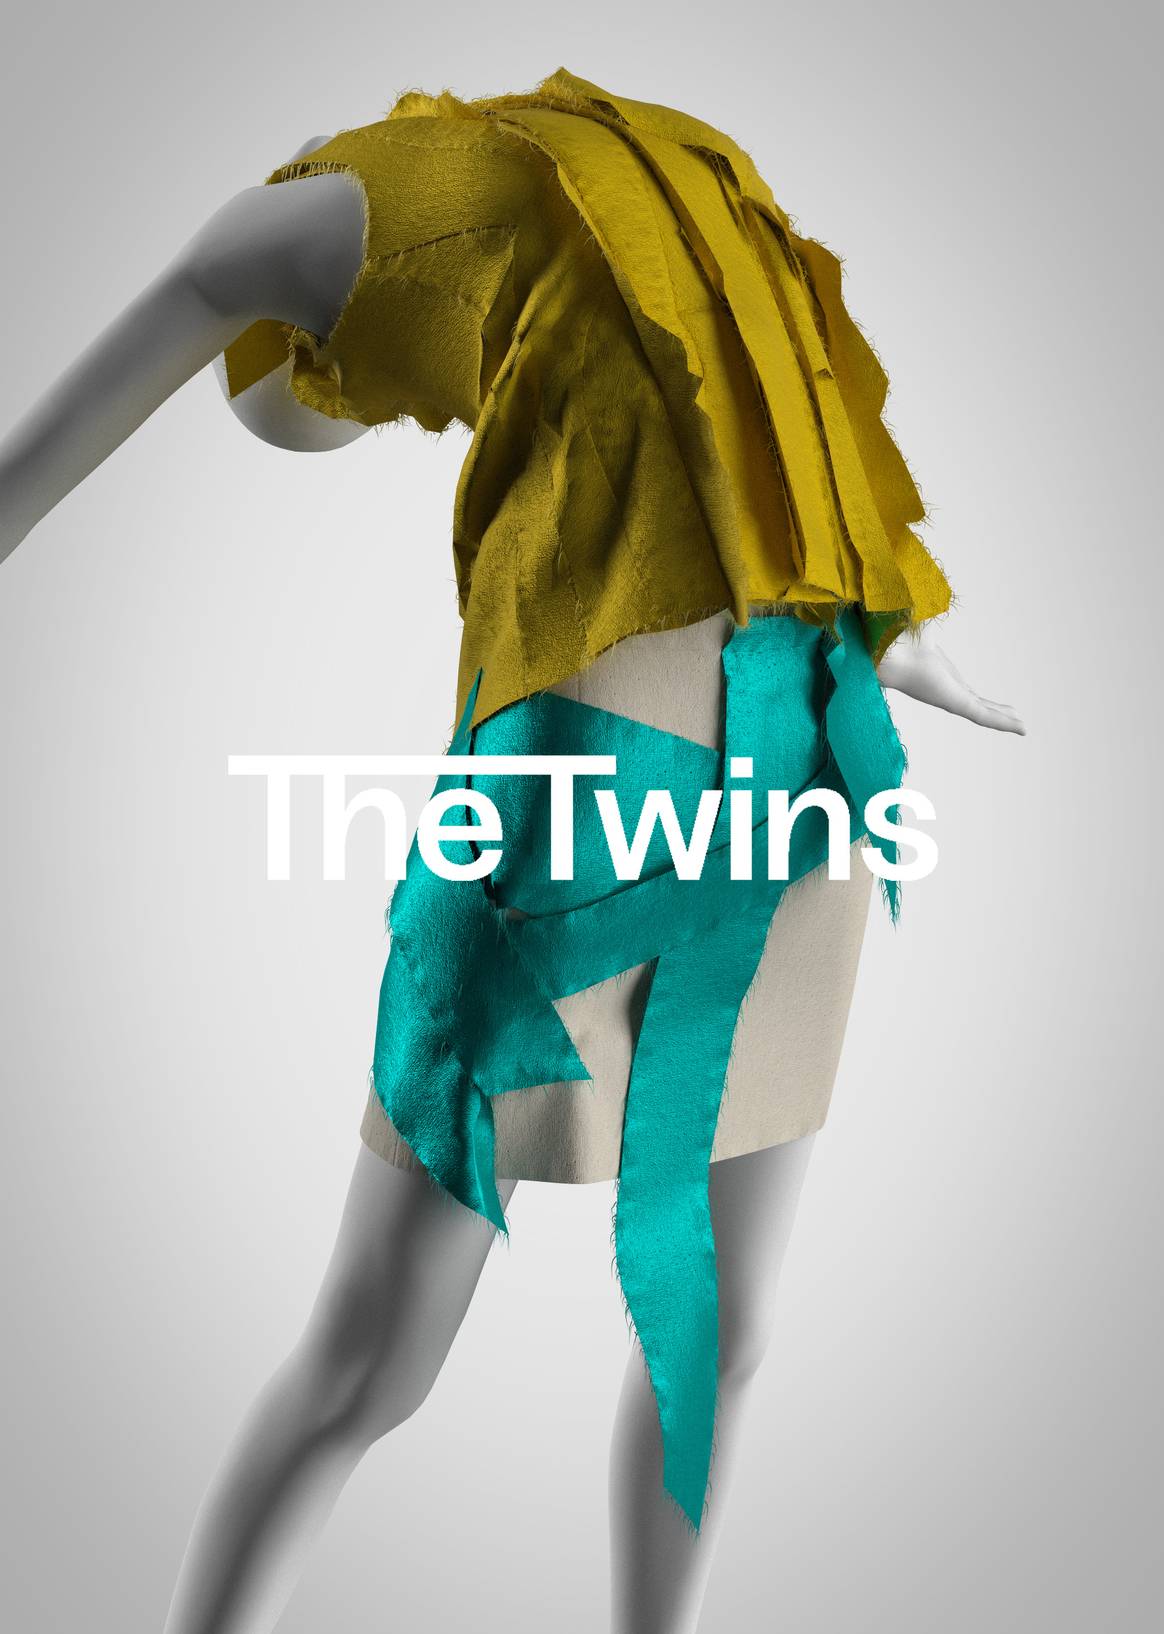 Beeld: The Twins / studio747athens